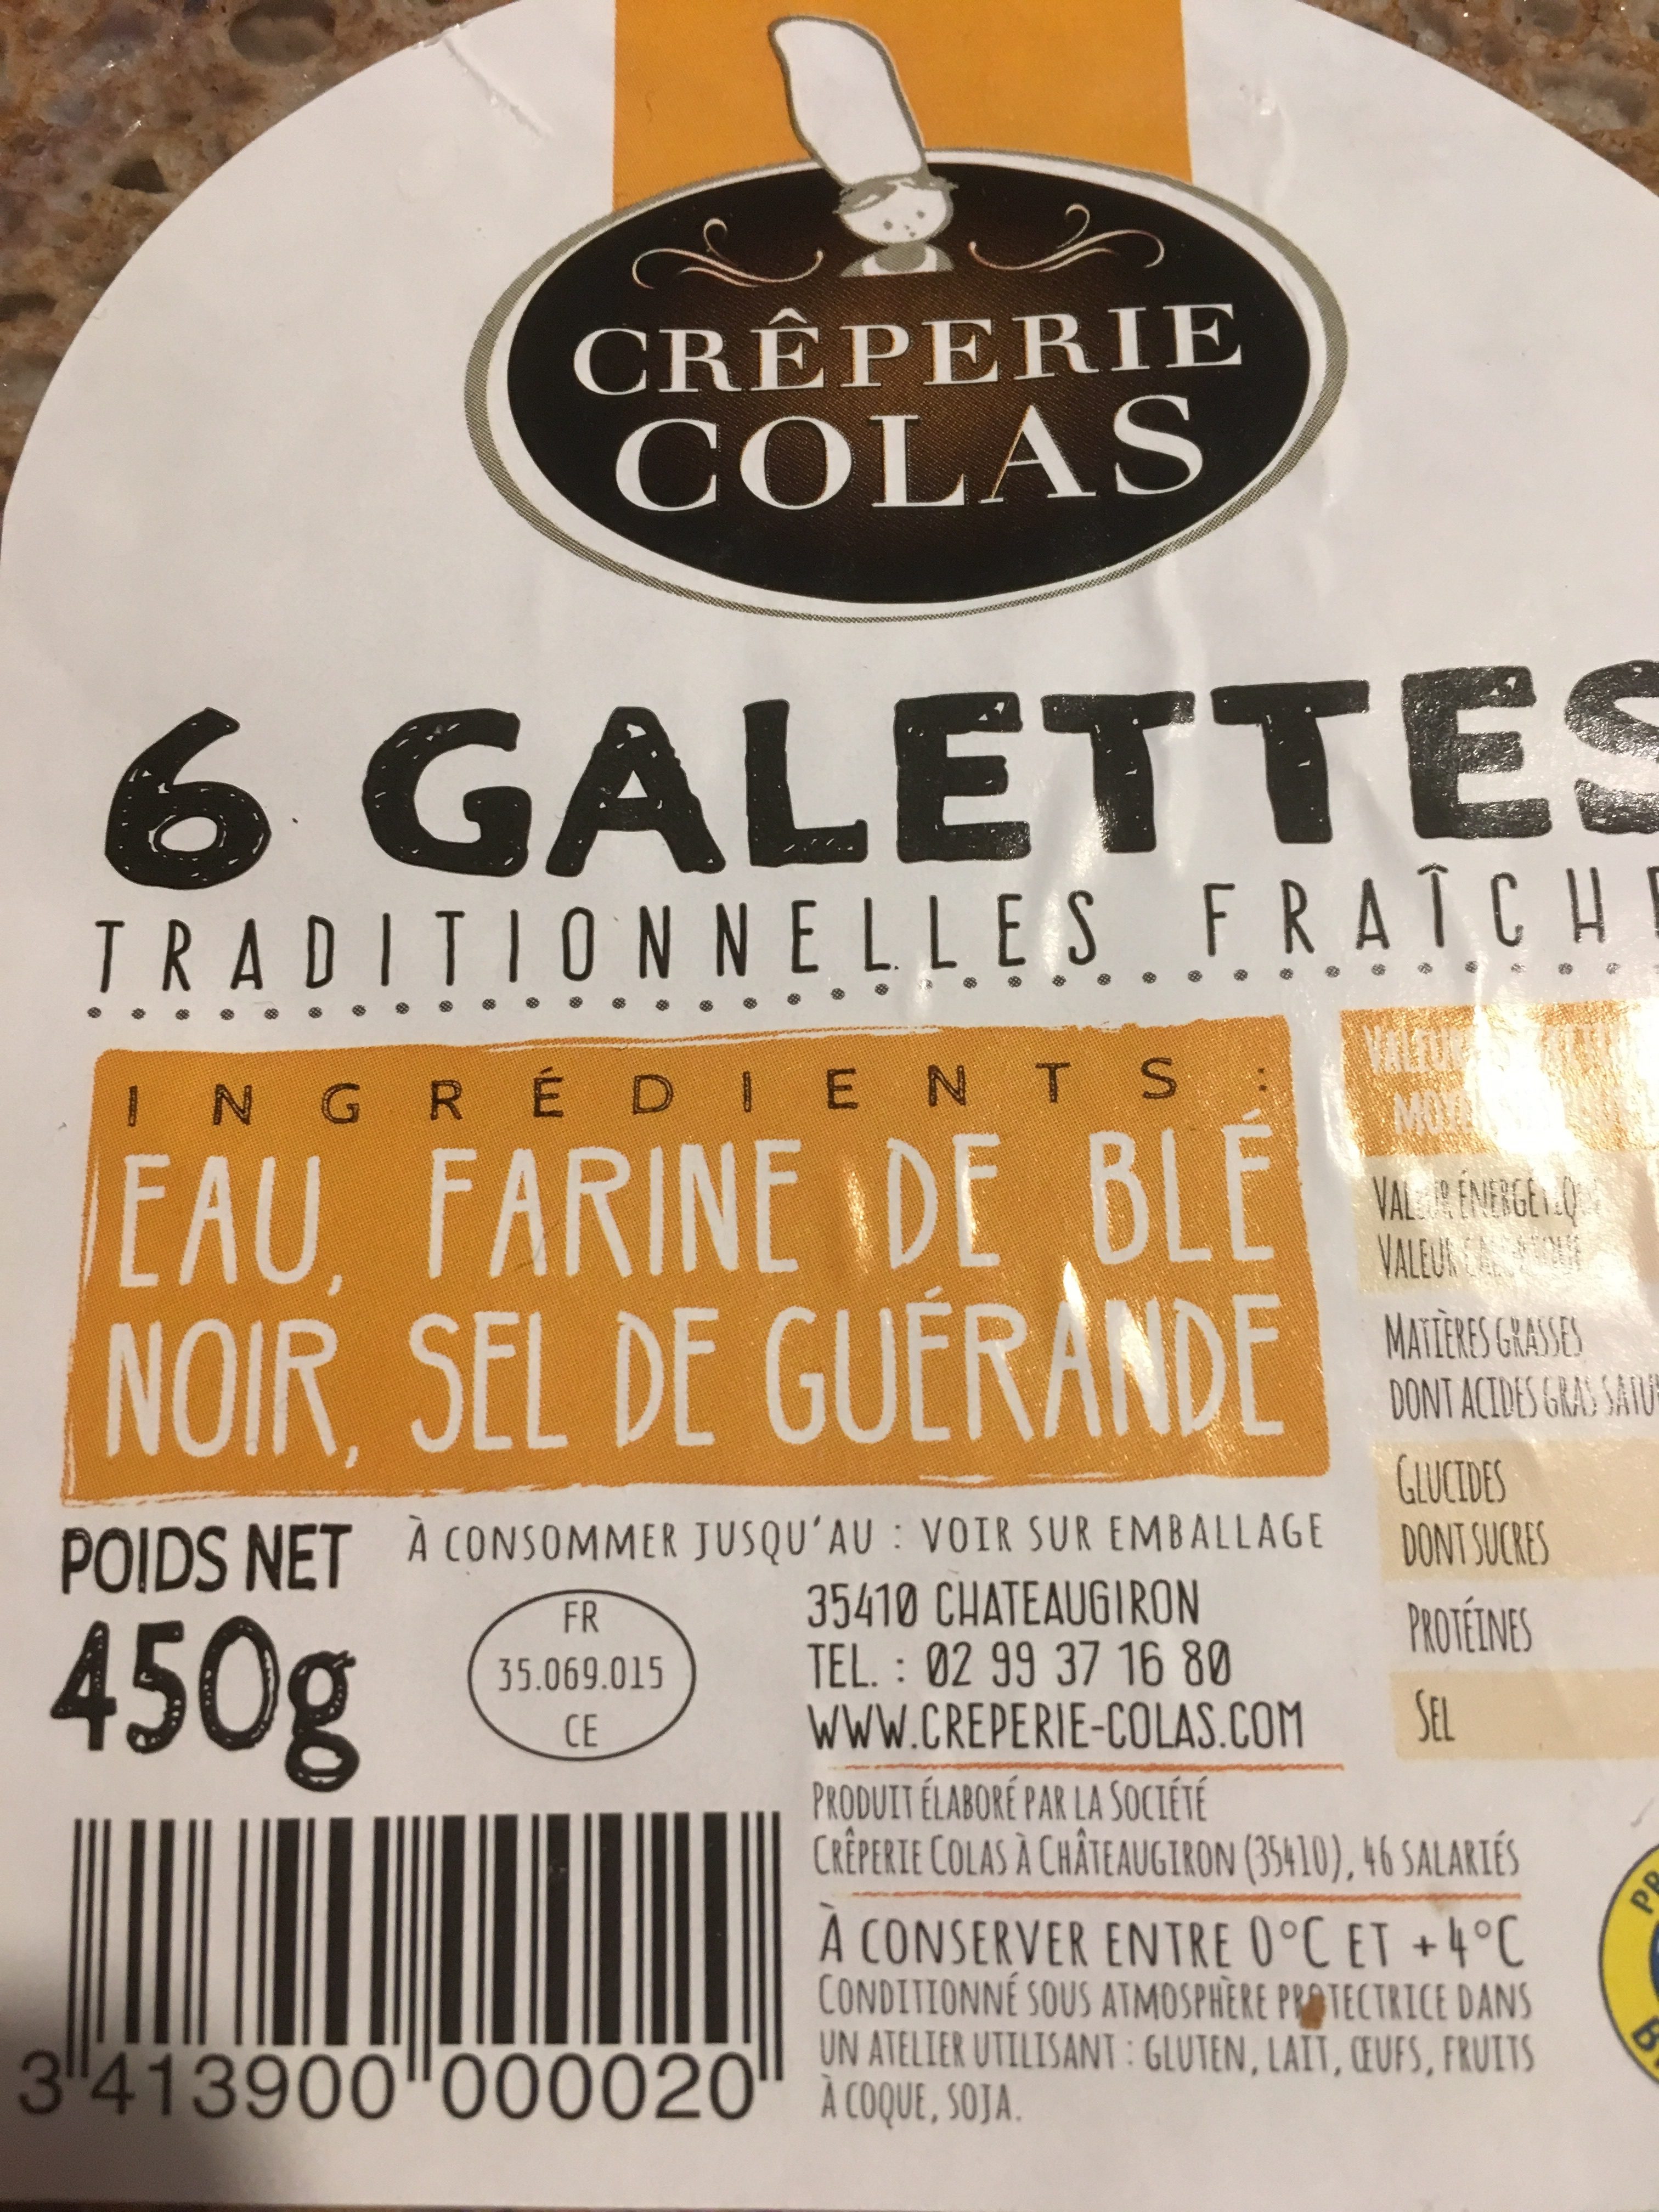 Galettes Colasx6, 450g - Ingredients - fr